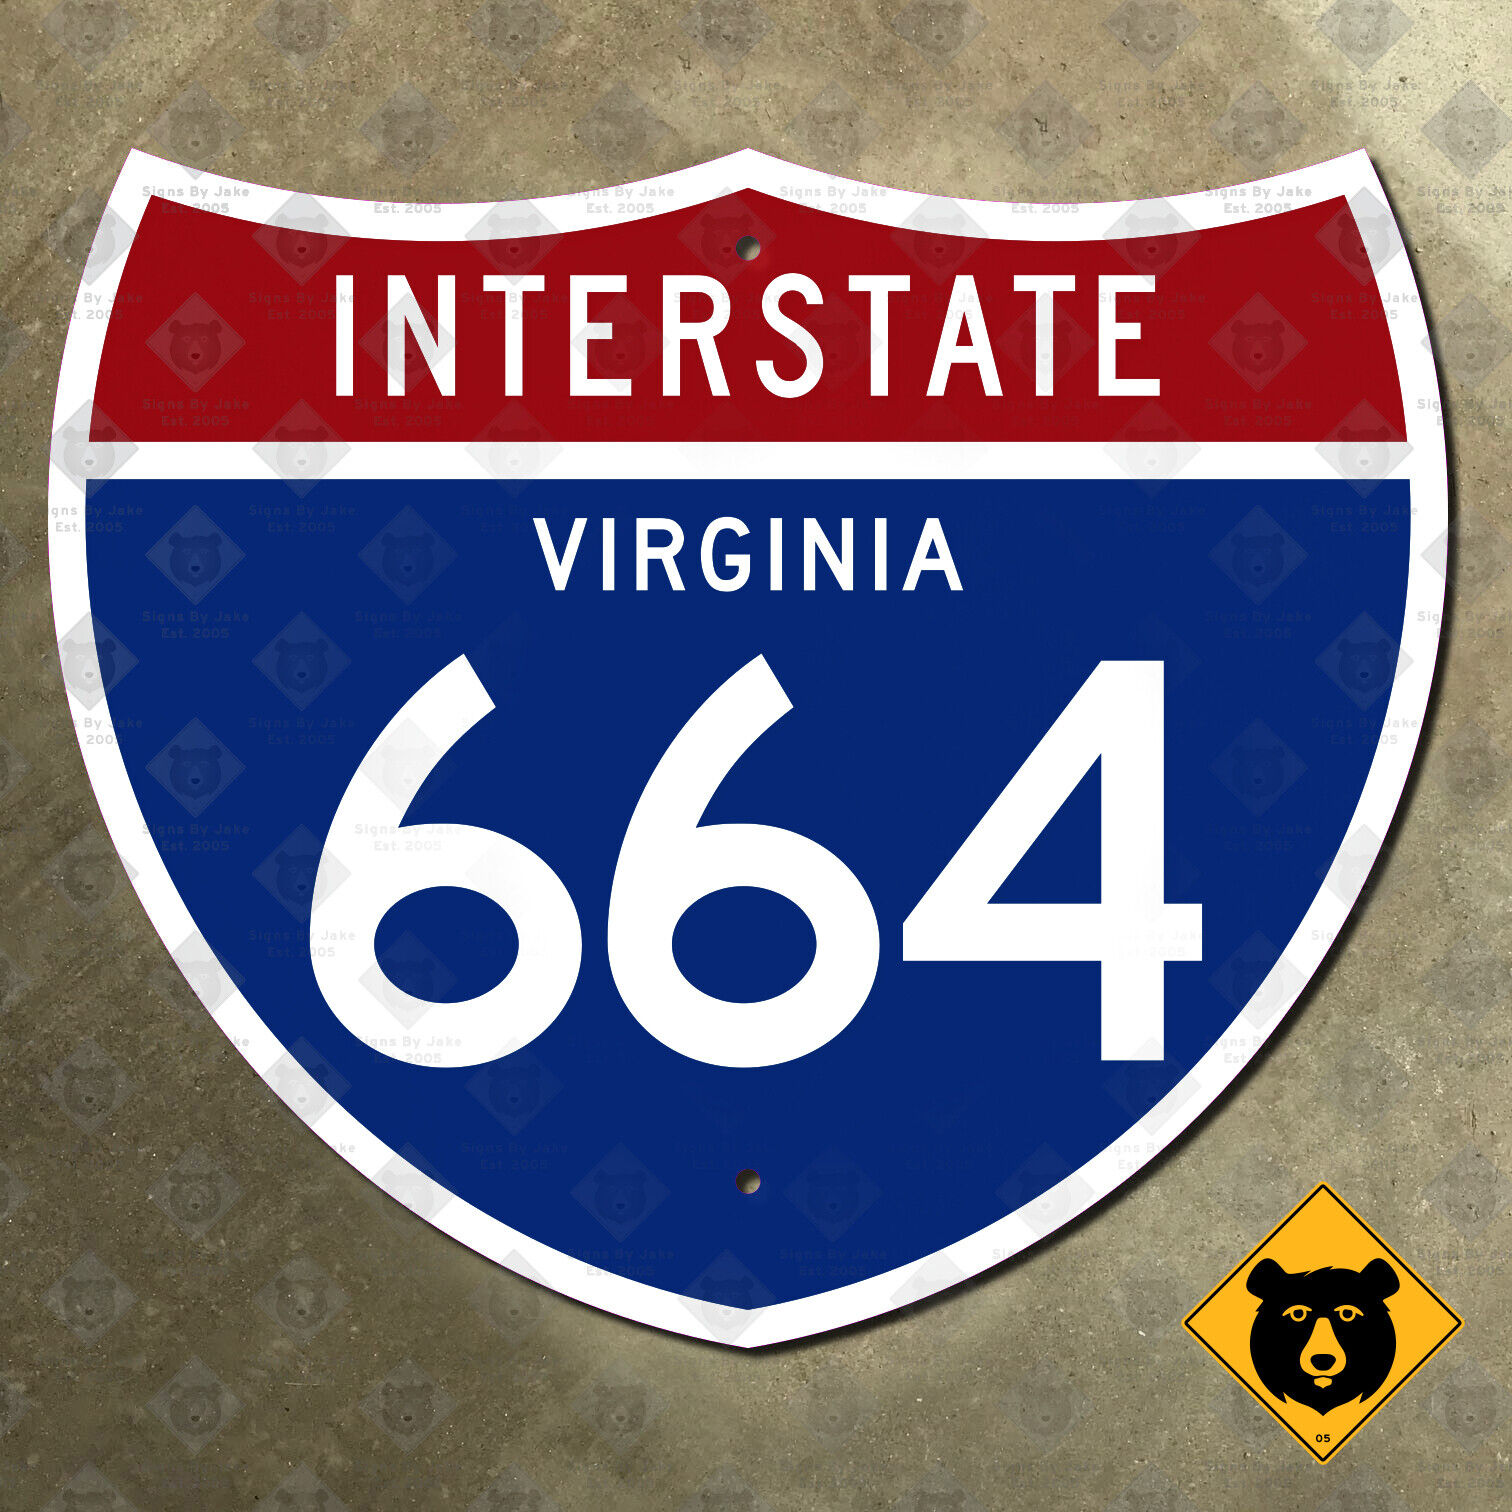 Virginia Interstate 664 road sign highway marker 1961 Chesapeake Hampton 12x10